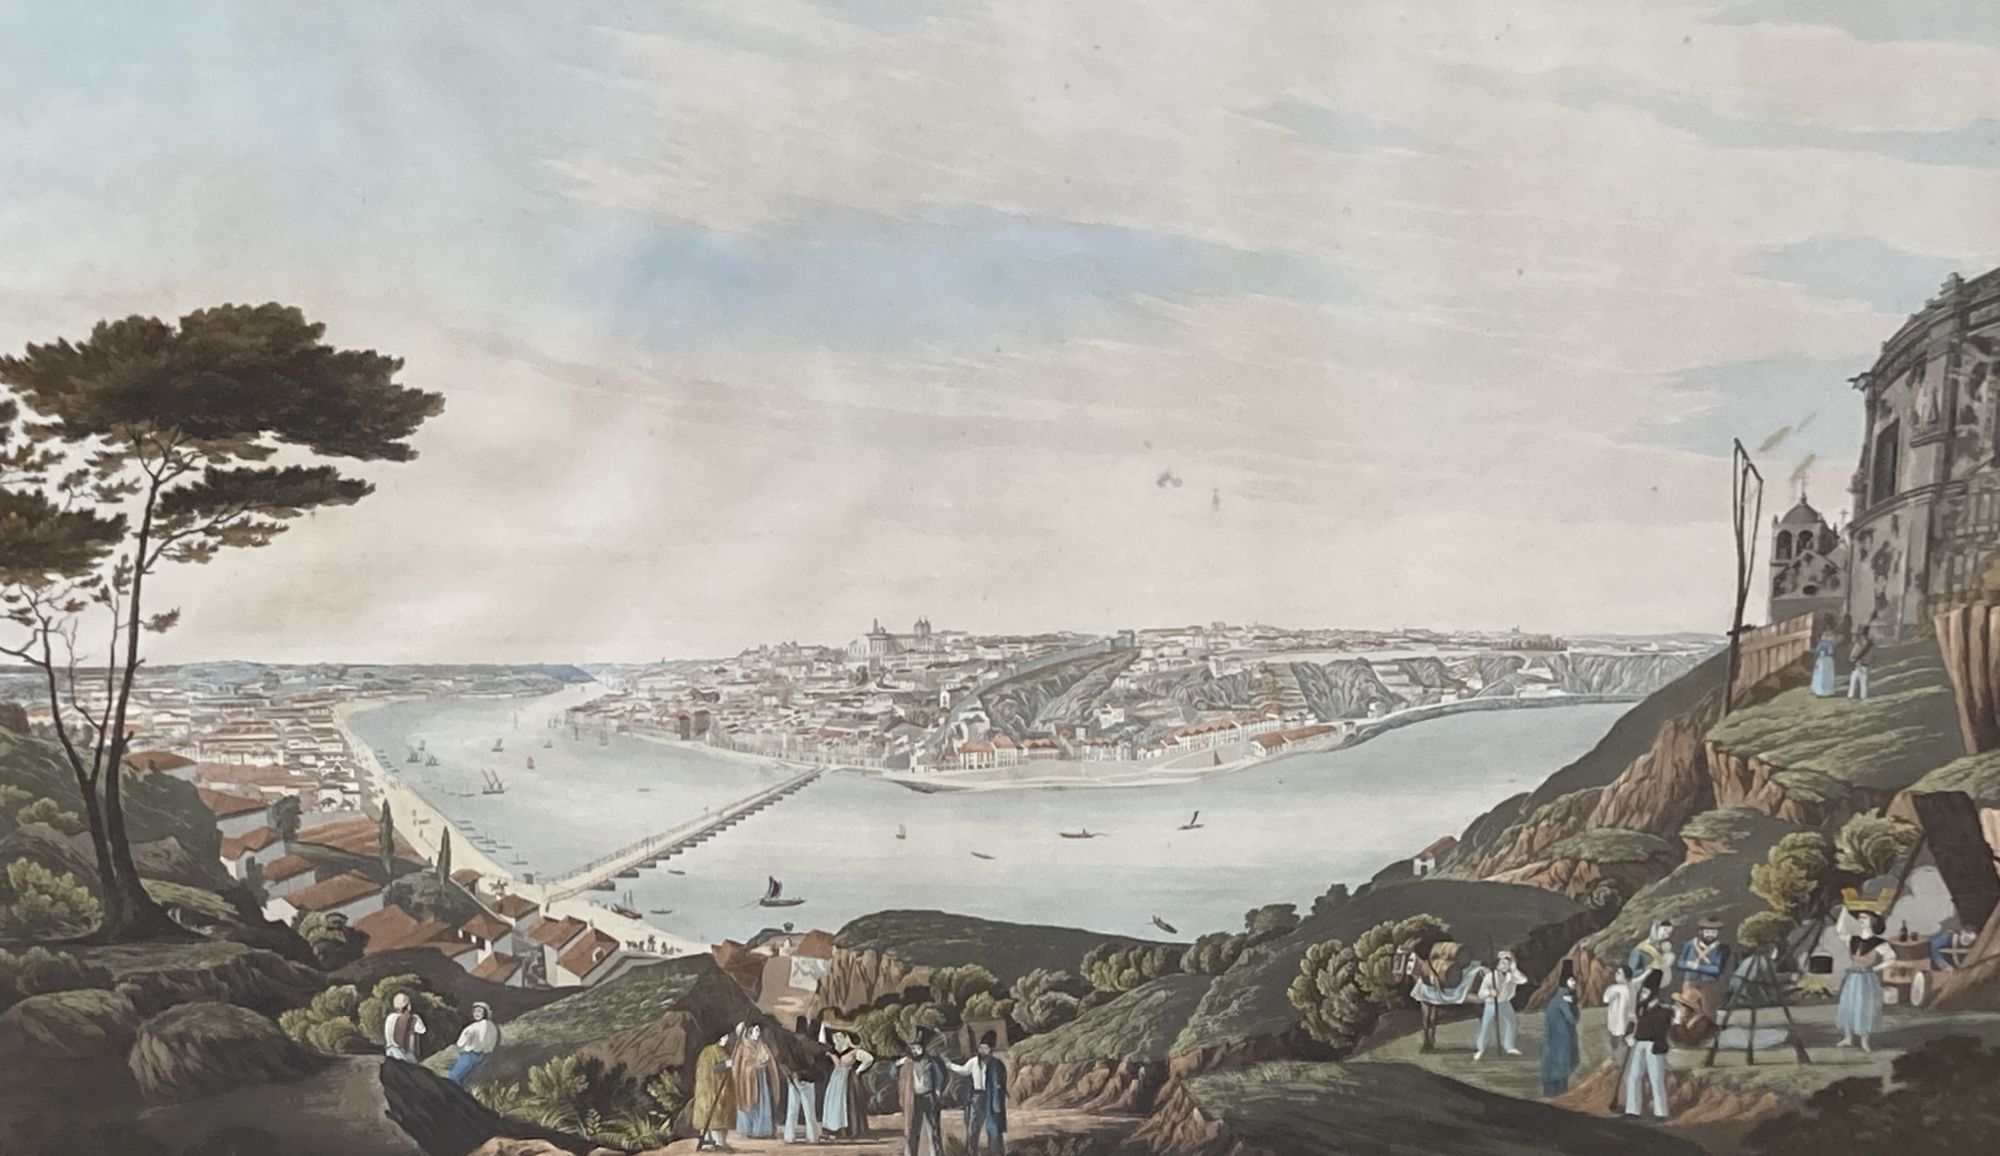 Pavel after Captain C. Van Zelle, coloured aquatint, View of the City of Oporto 1833, 49 x 70cm